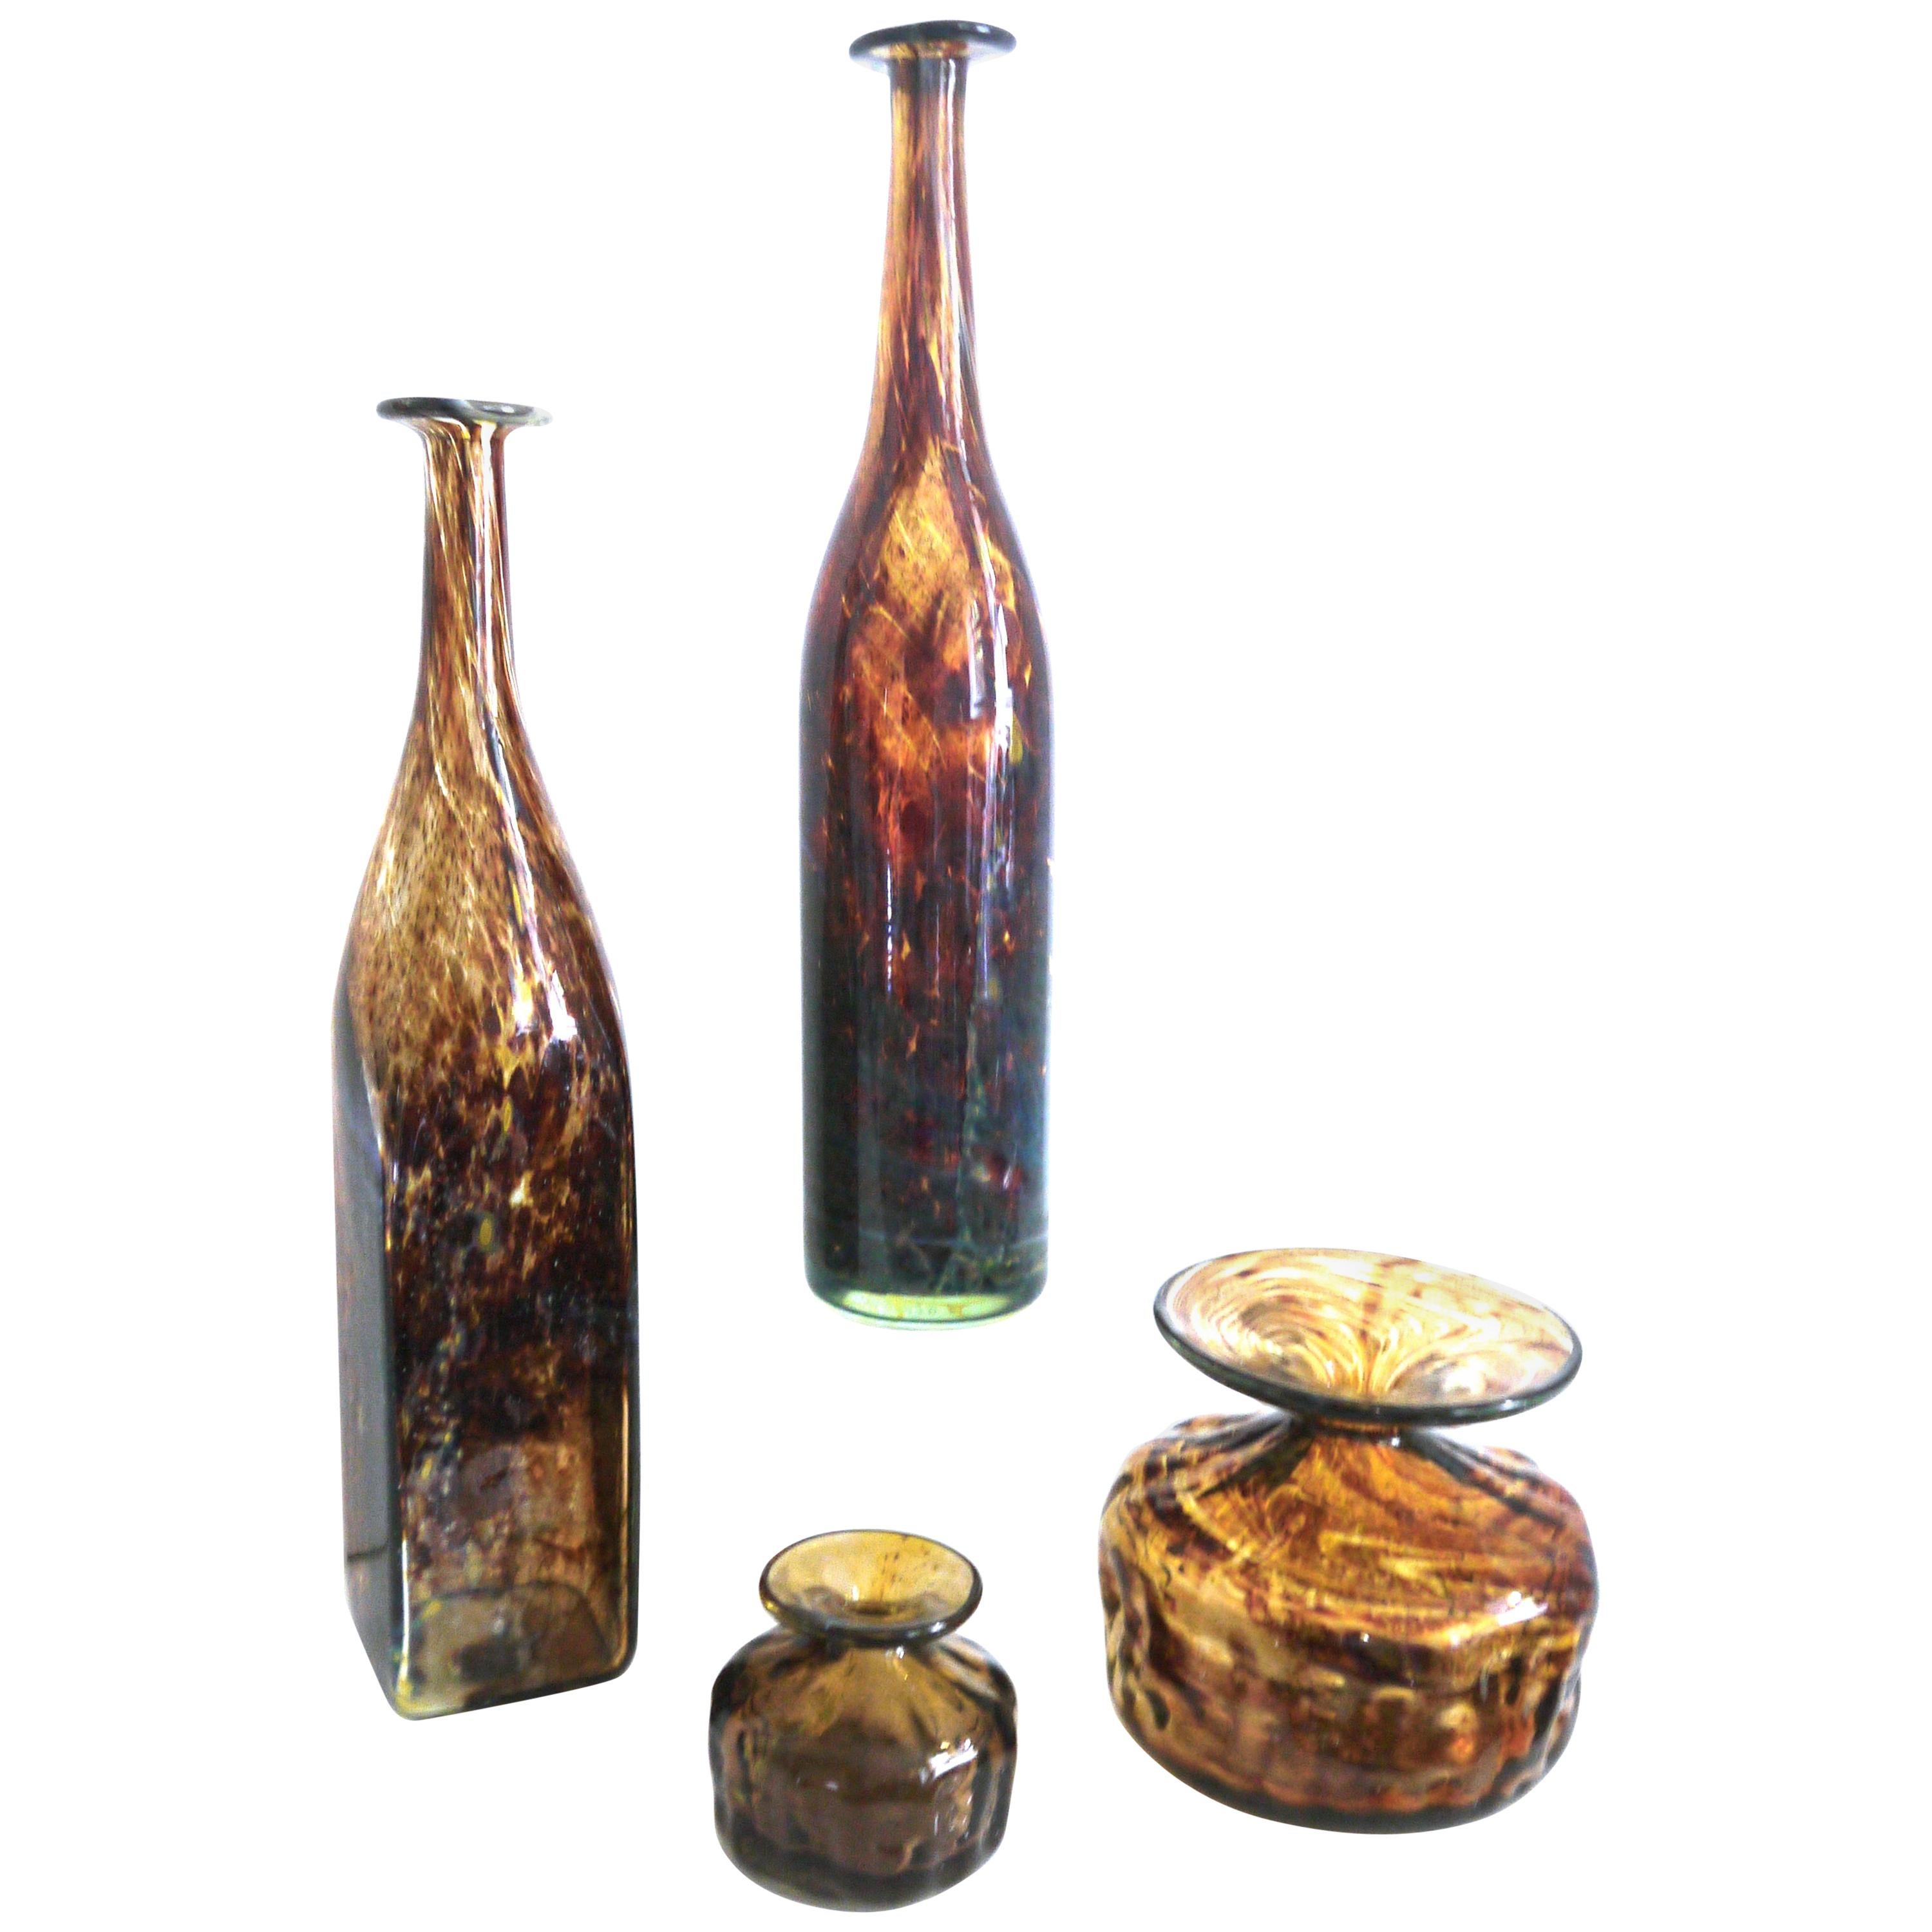 Mdina 'Tortoiseshell' Art Glass Collection 1970s Signed Michael Harris For Sale